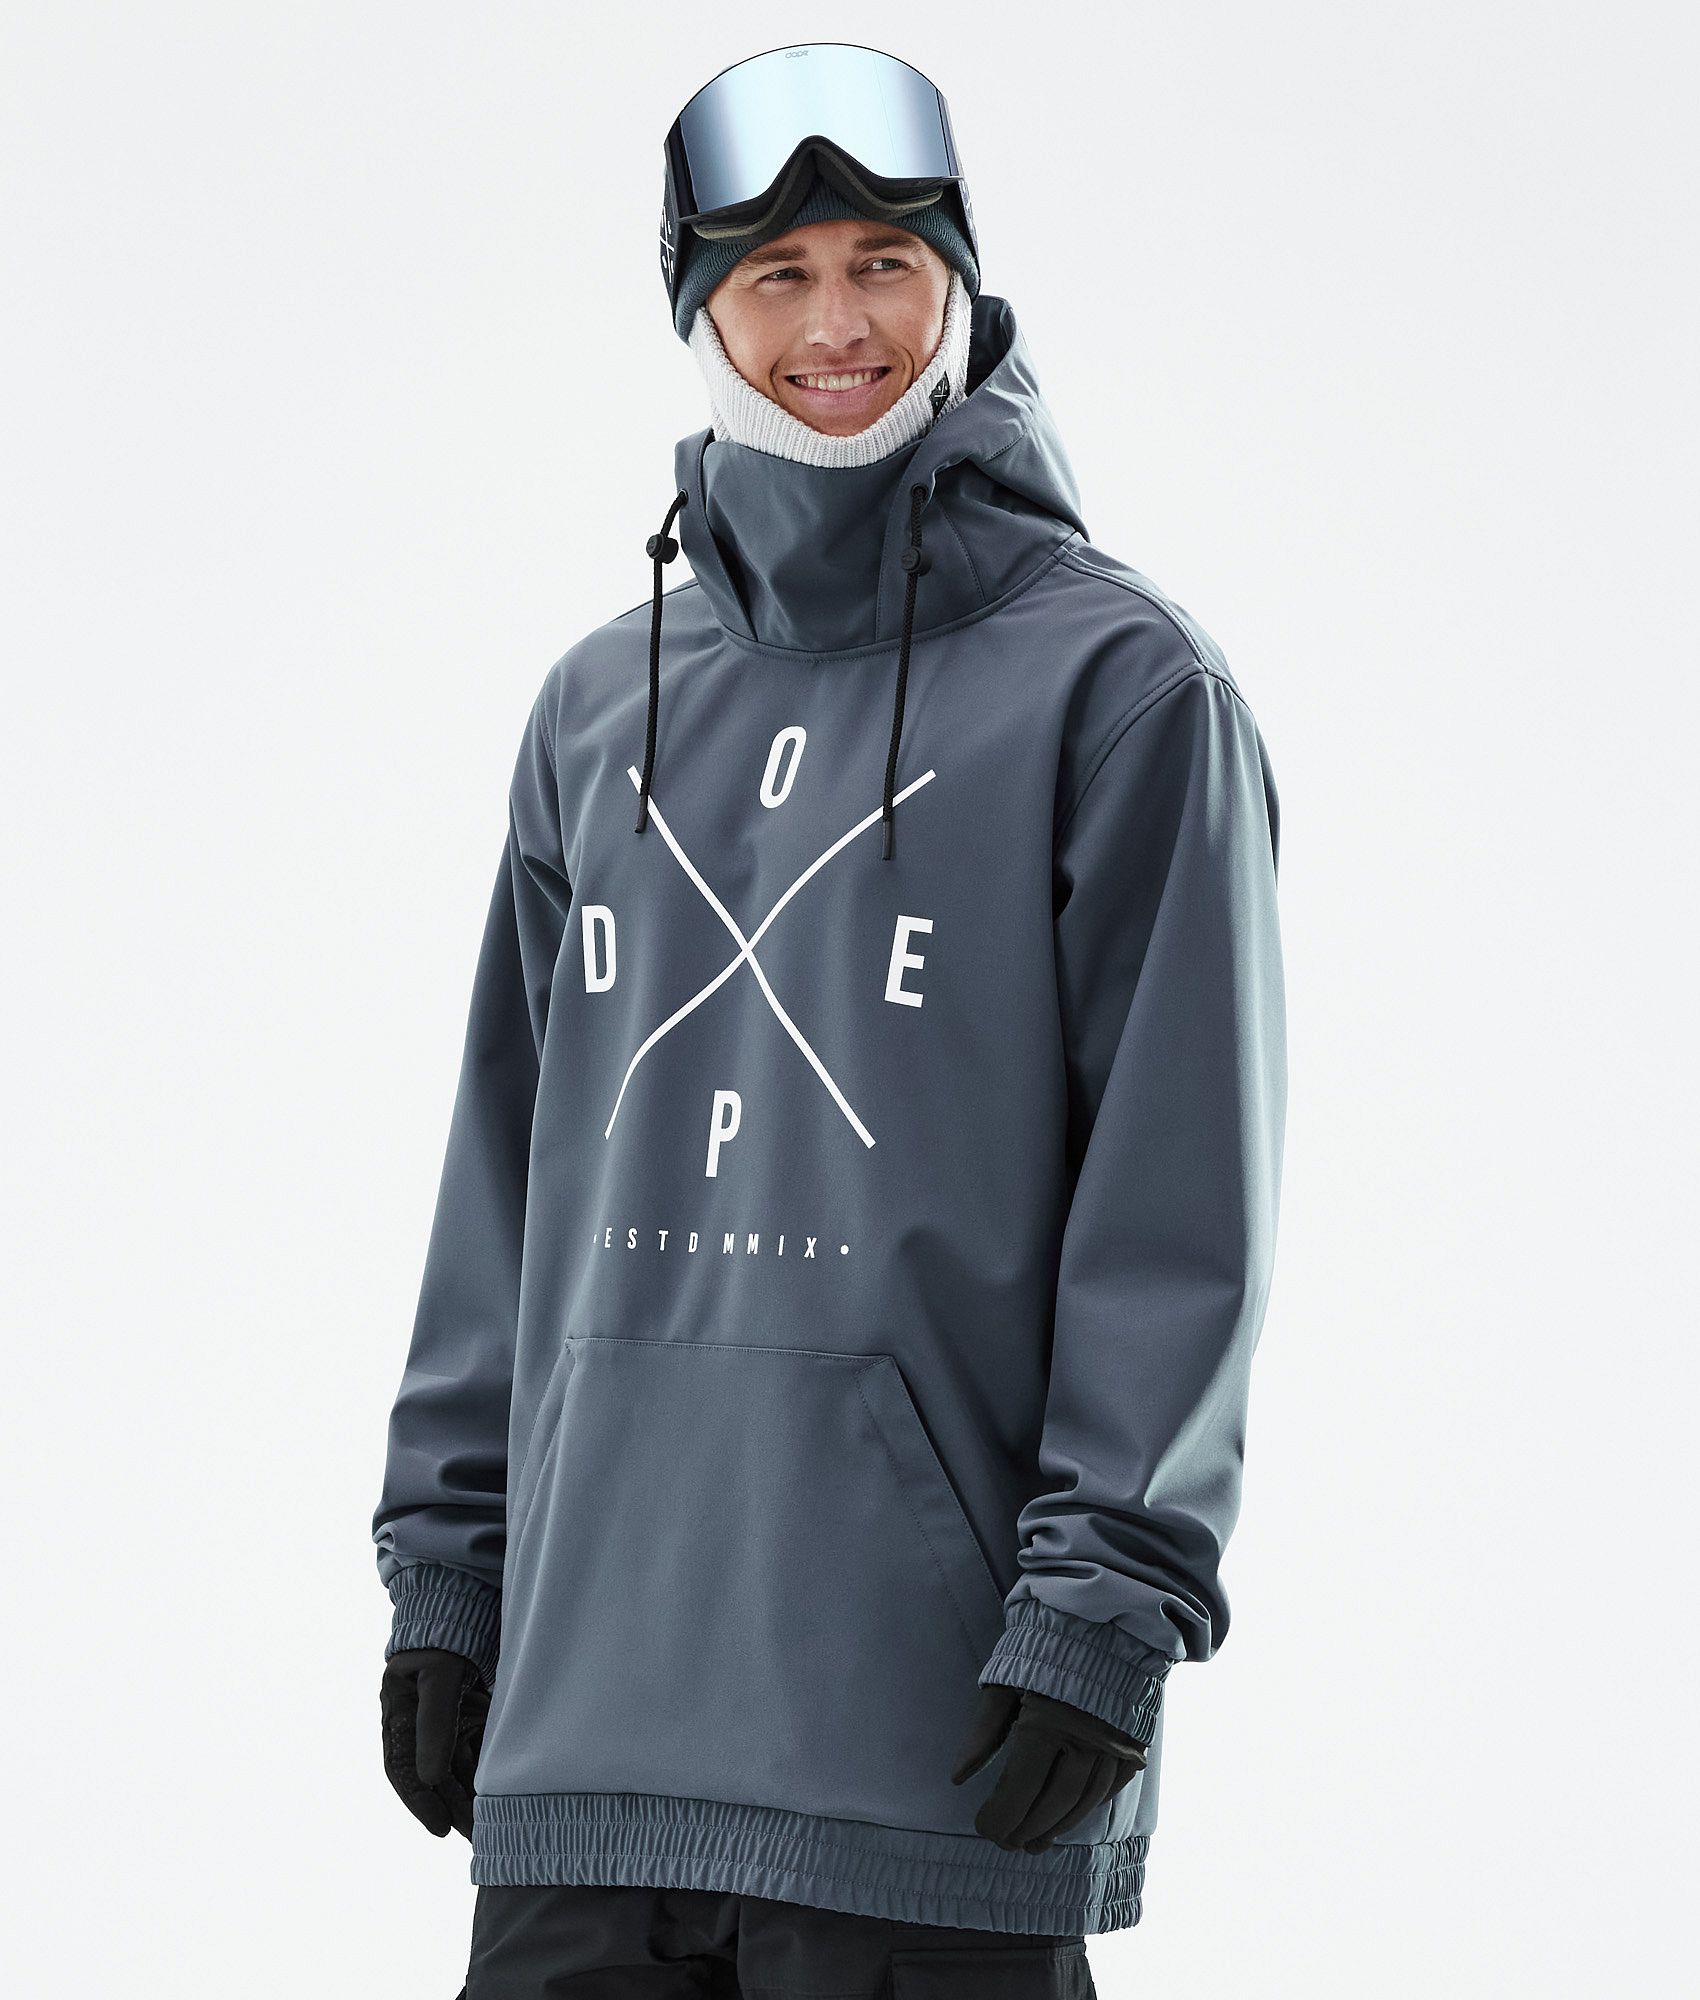 KEFITEVD Waterproof Snowboarding Jackets for Men Multi Pockets Warm Fleece Fishing Ski Raincoats with Detachable Hood 